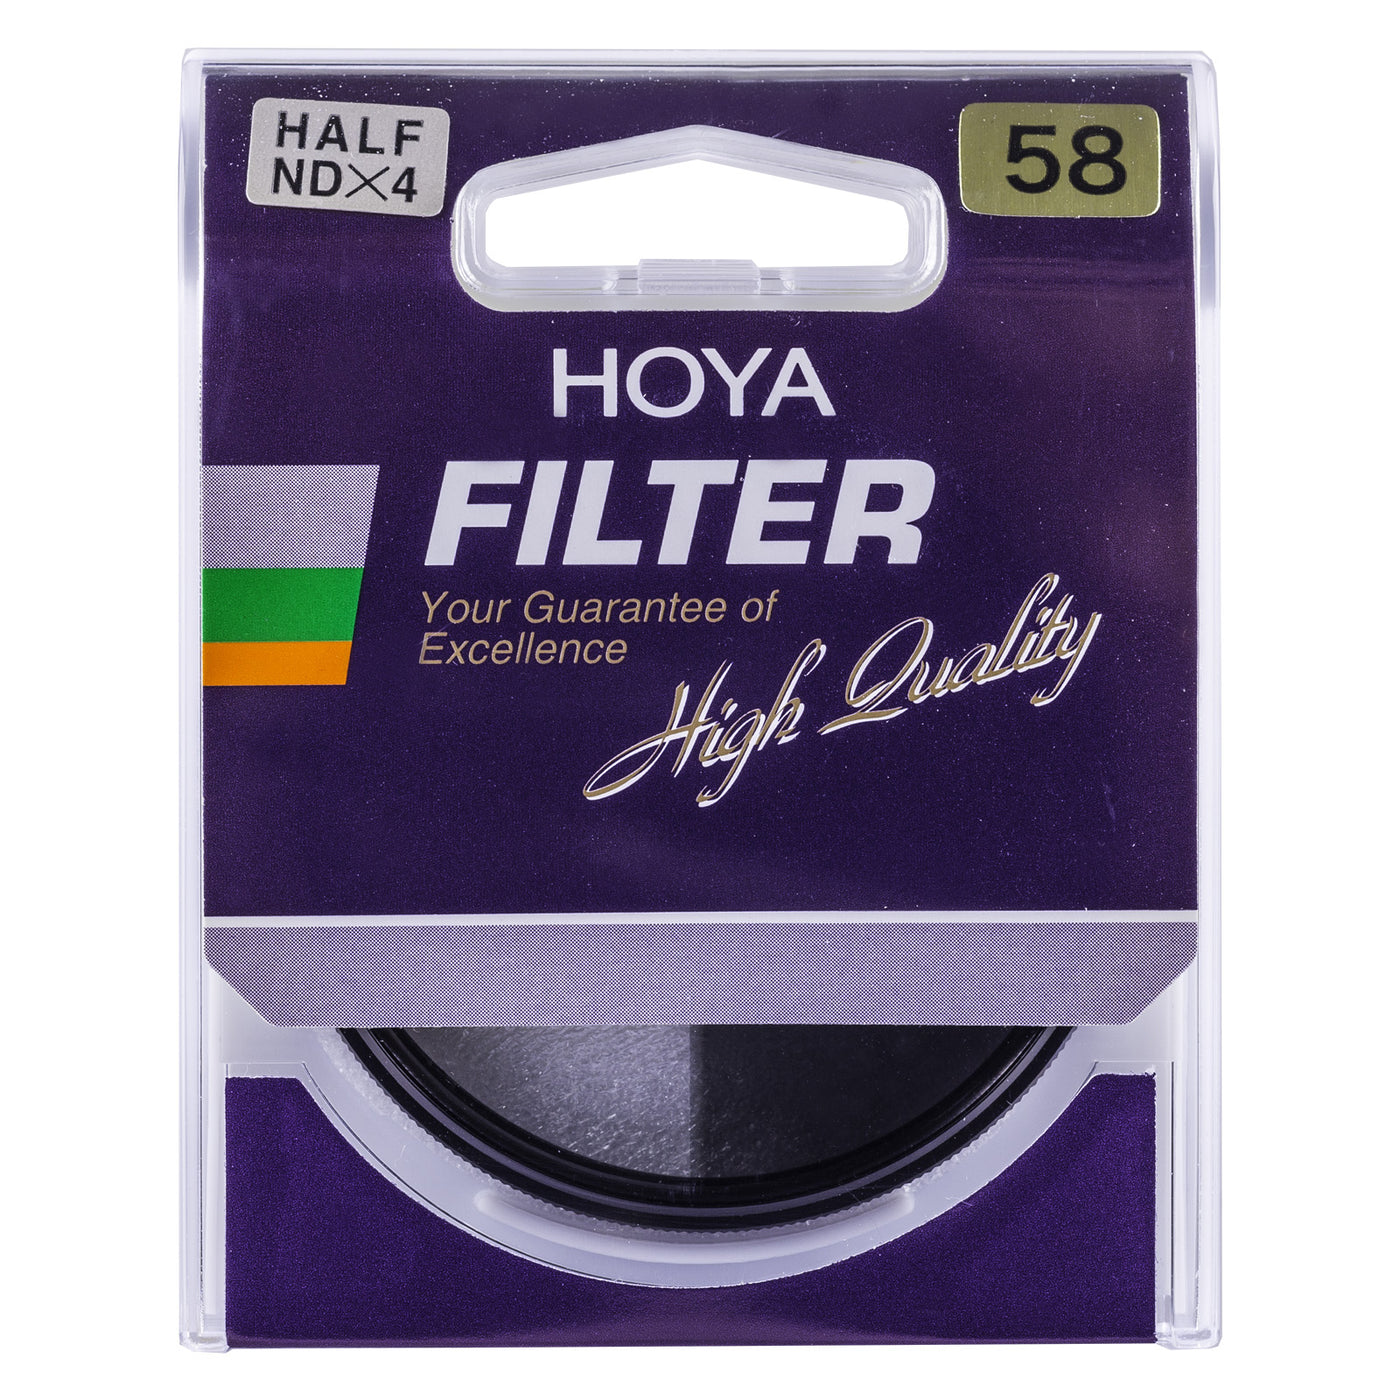 Hoya Half ND4 Filter Box